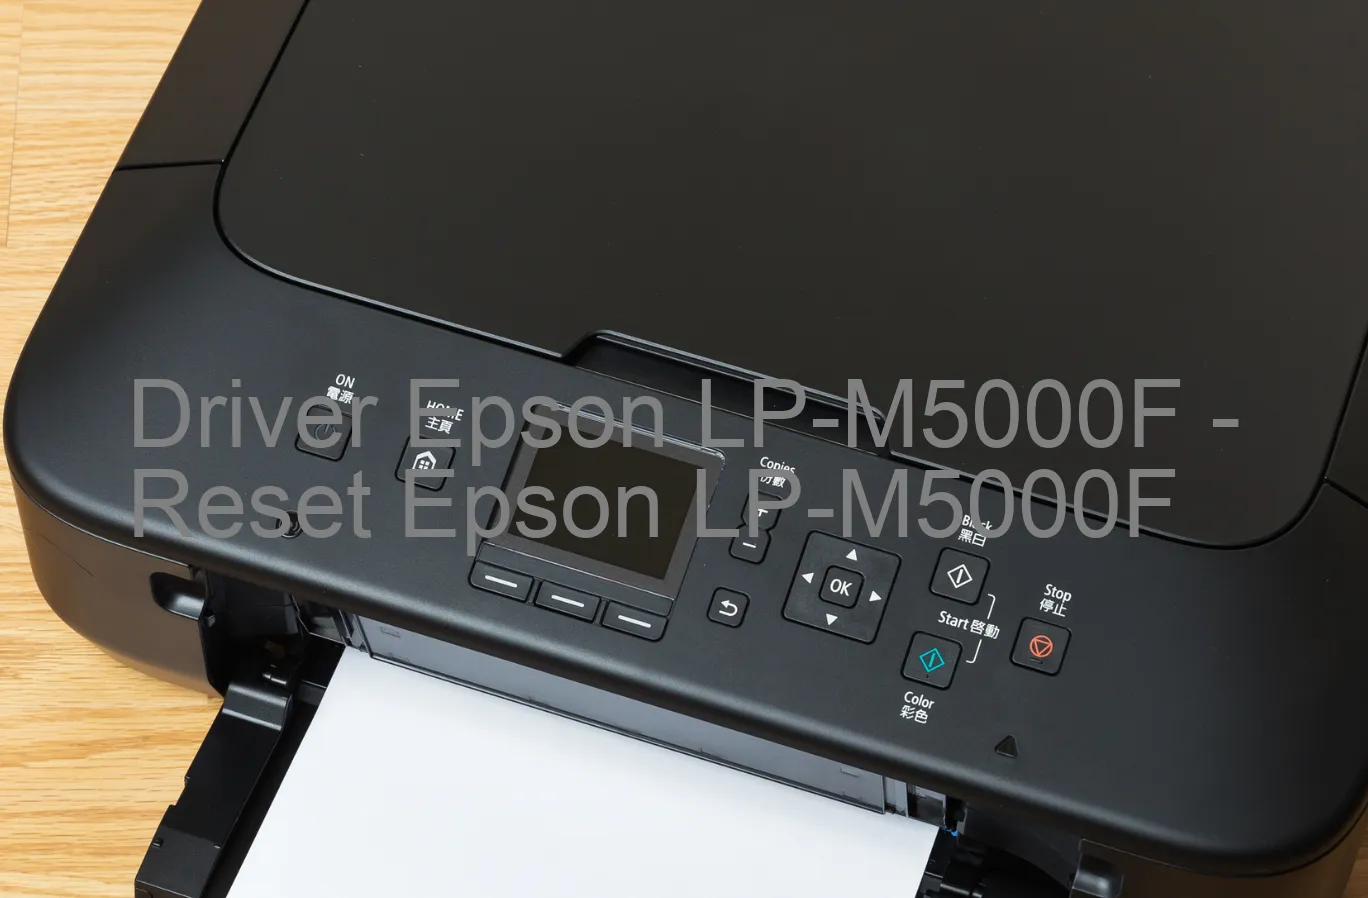 Epson LP-M5000Fのドライバー、Epson LP-M5000Fのリセットソフトウェア